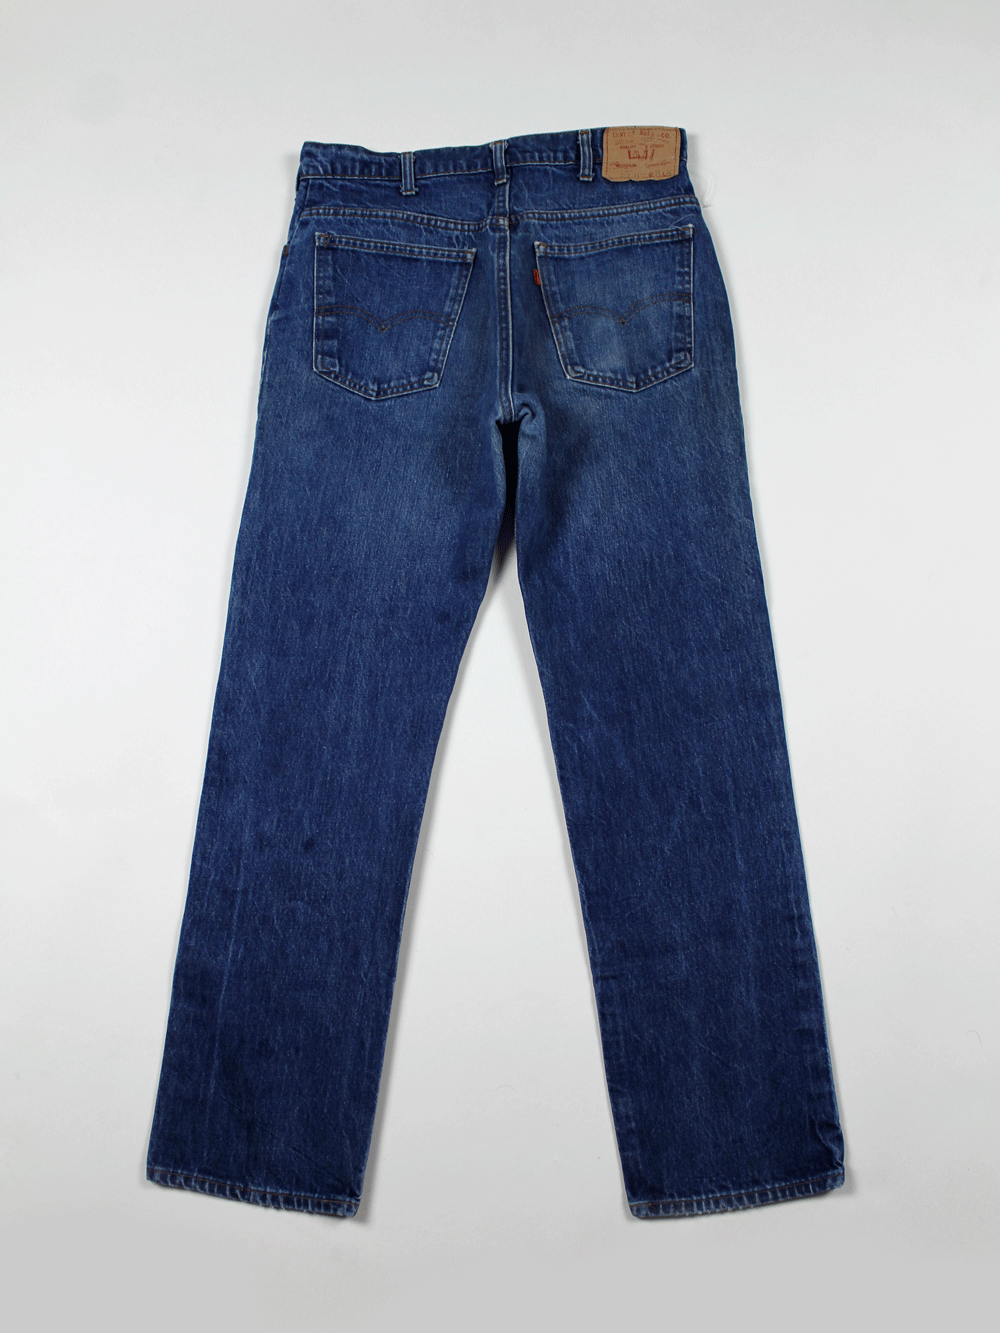 Levi's 519 Vintage Jeans (Orange Label)